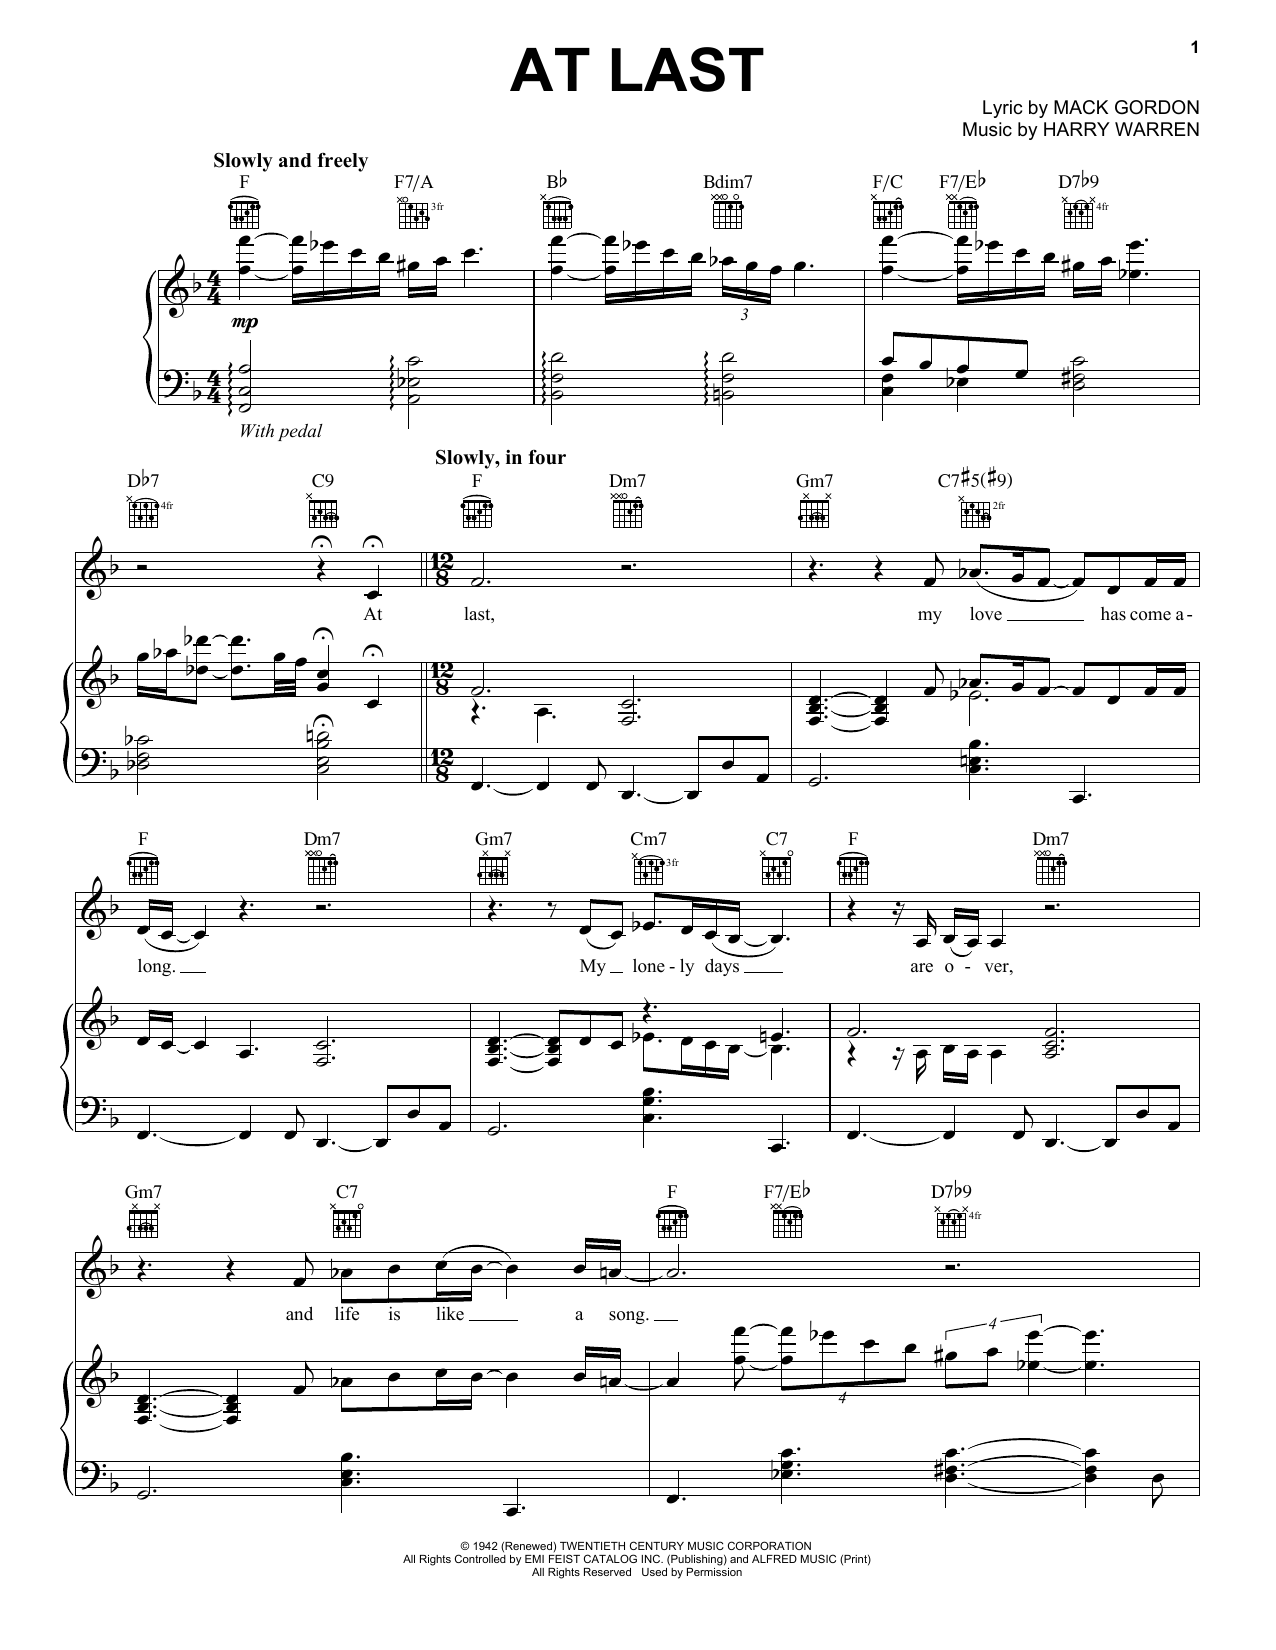 Etta James At Last Sheet Music Notes & Chords for Baritone Ukulele - Download or Print PDF